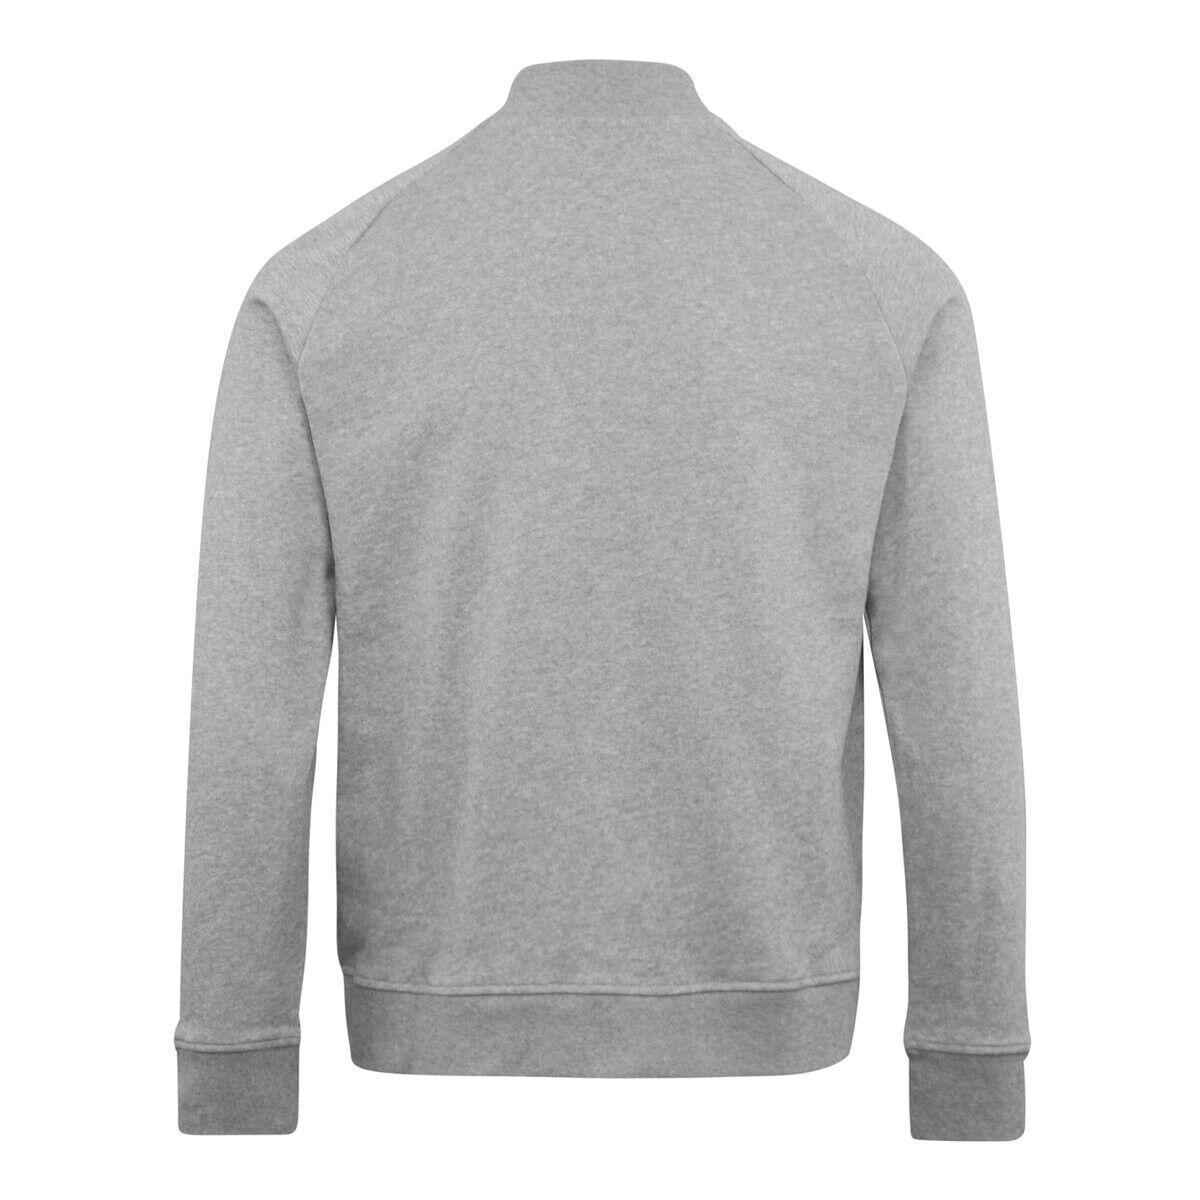 j lindeberg josef full zip sweater shirt grey melange uk size large